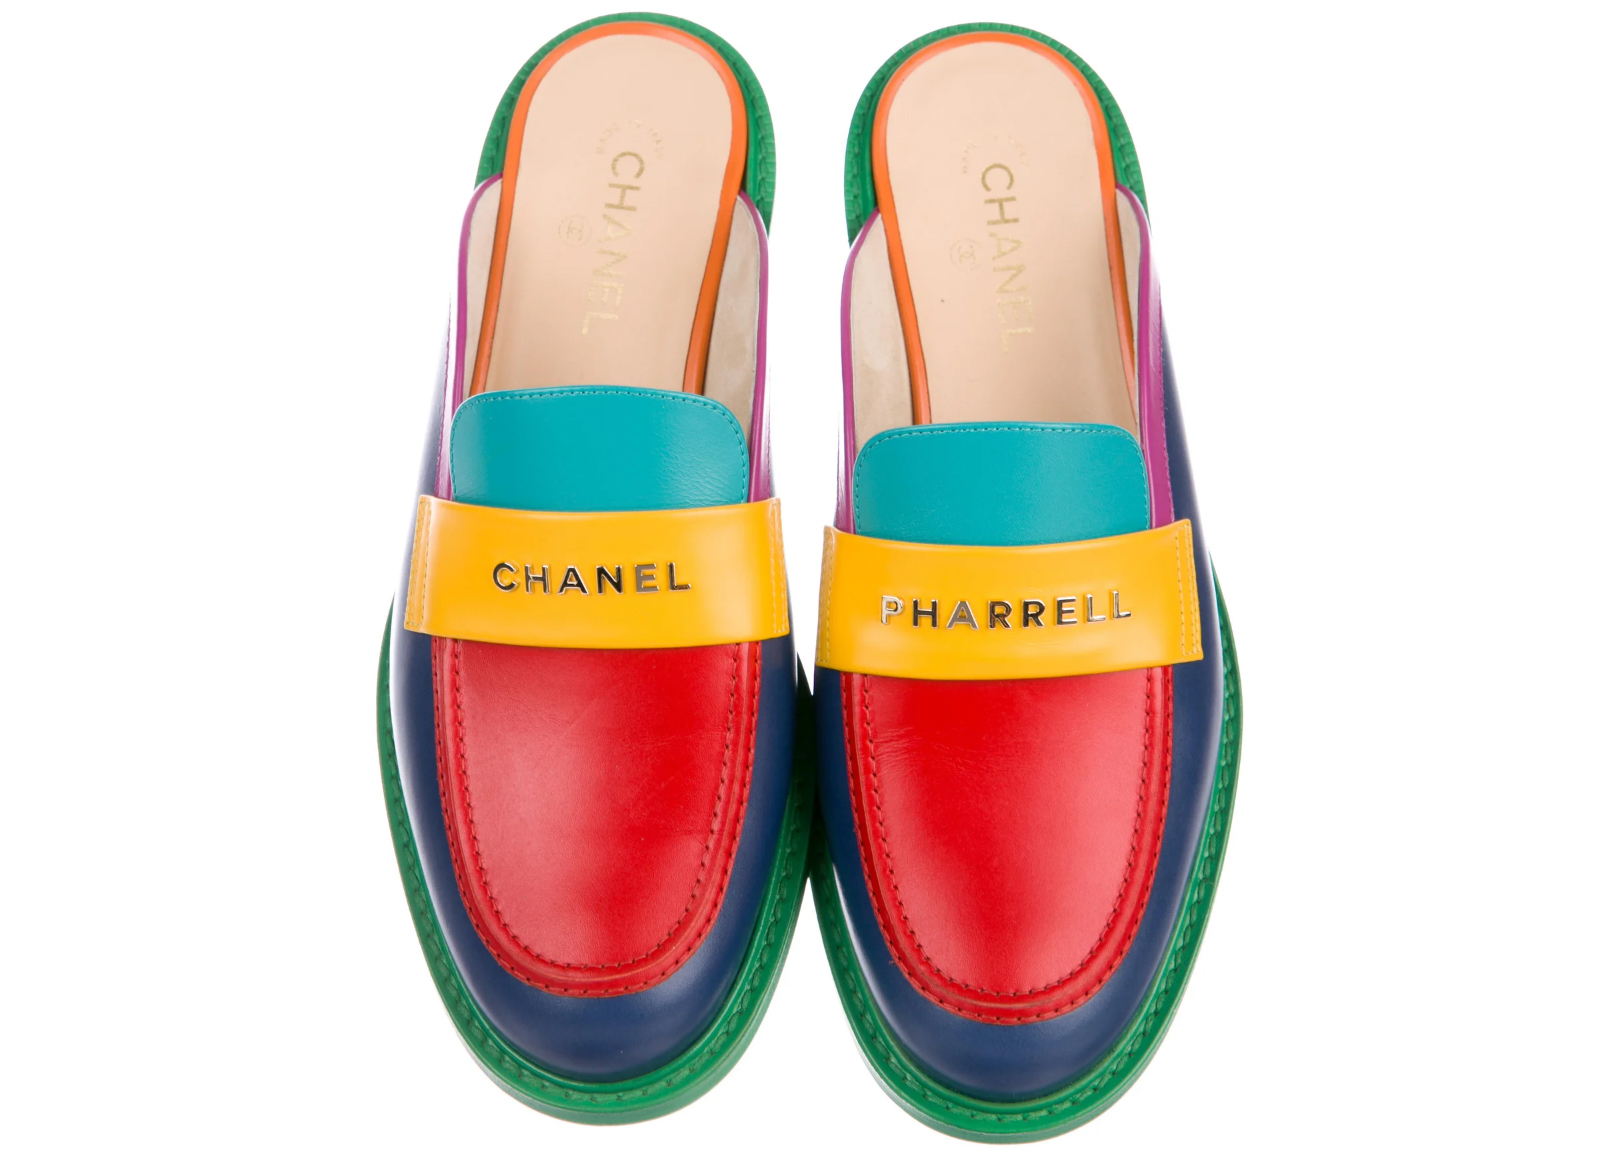 Chanel x Pharrell Launches at Hirshleifers  Americana Manhasset